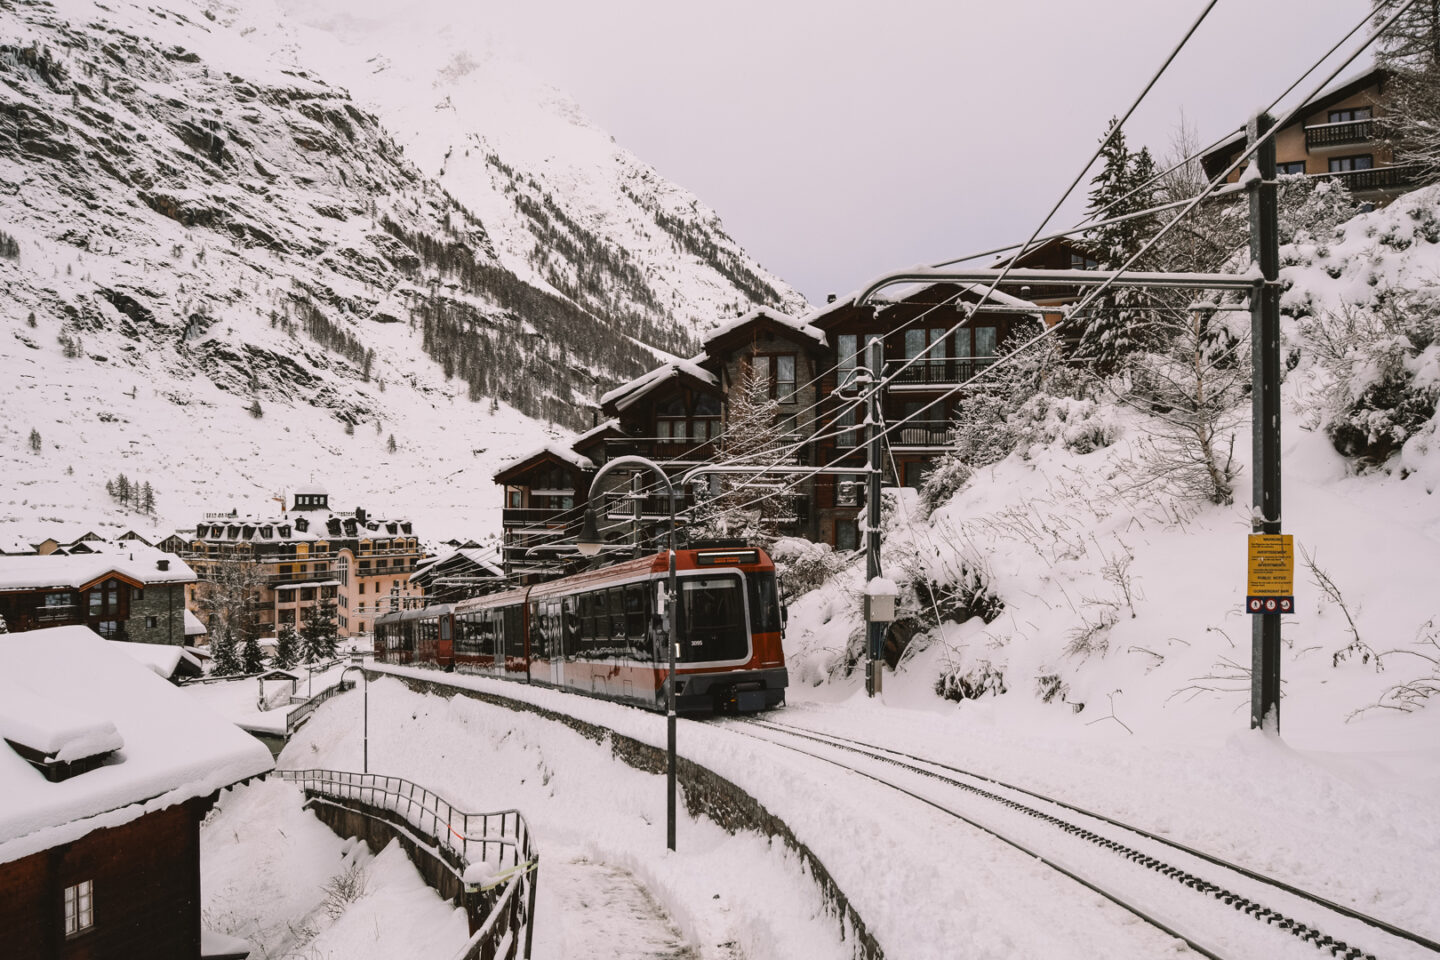 Getting the train through Zermatt